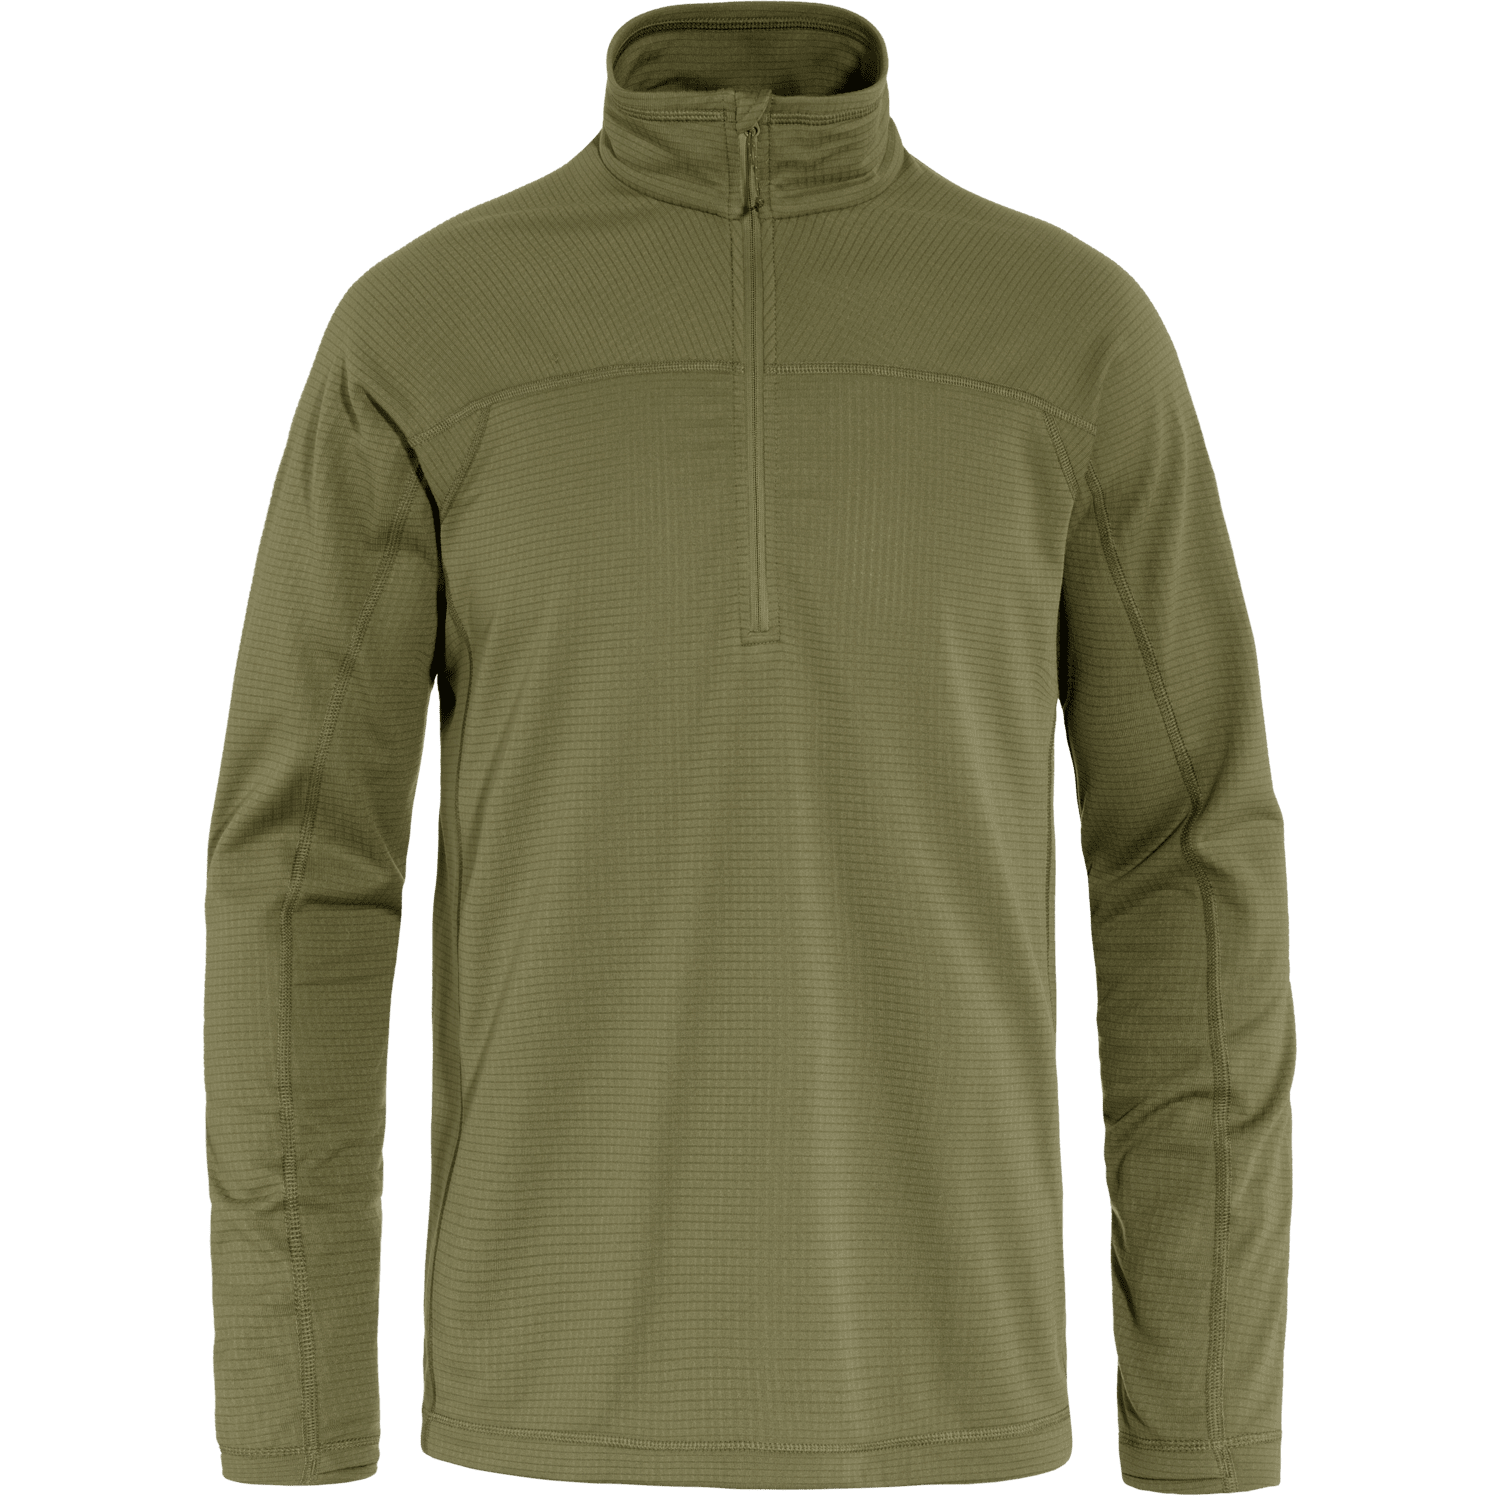 Fjällräven - M's Abisko Lite Fleece Half Zip - 100% Recycled polyester - Weekendbee - sustainable sportswear